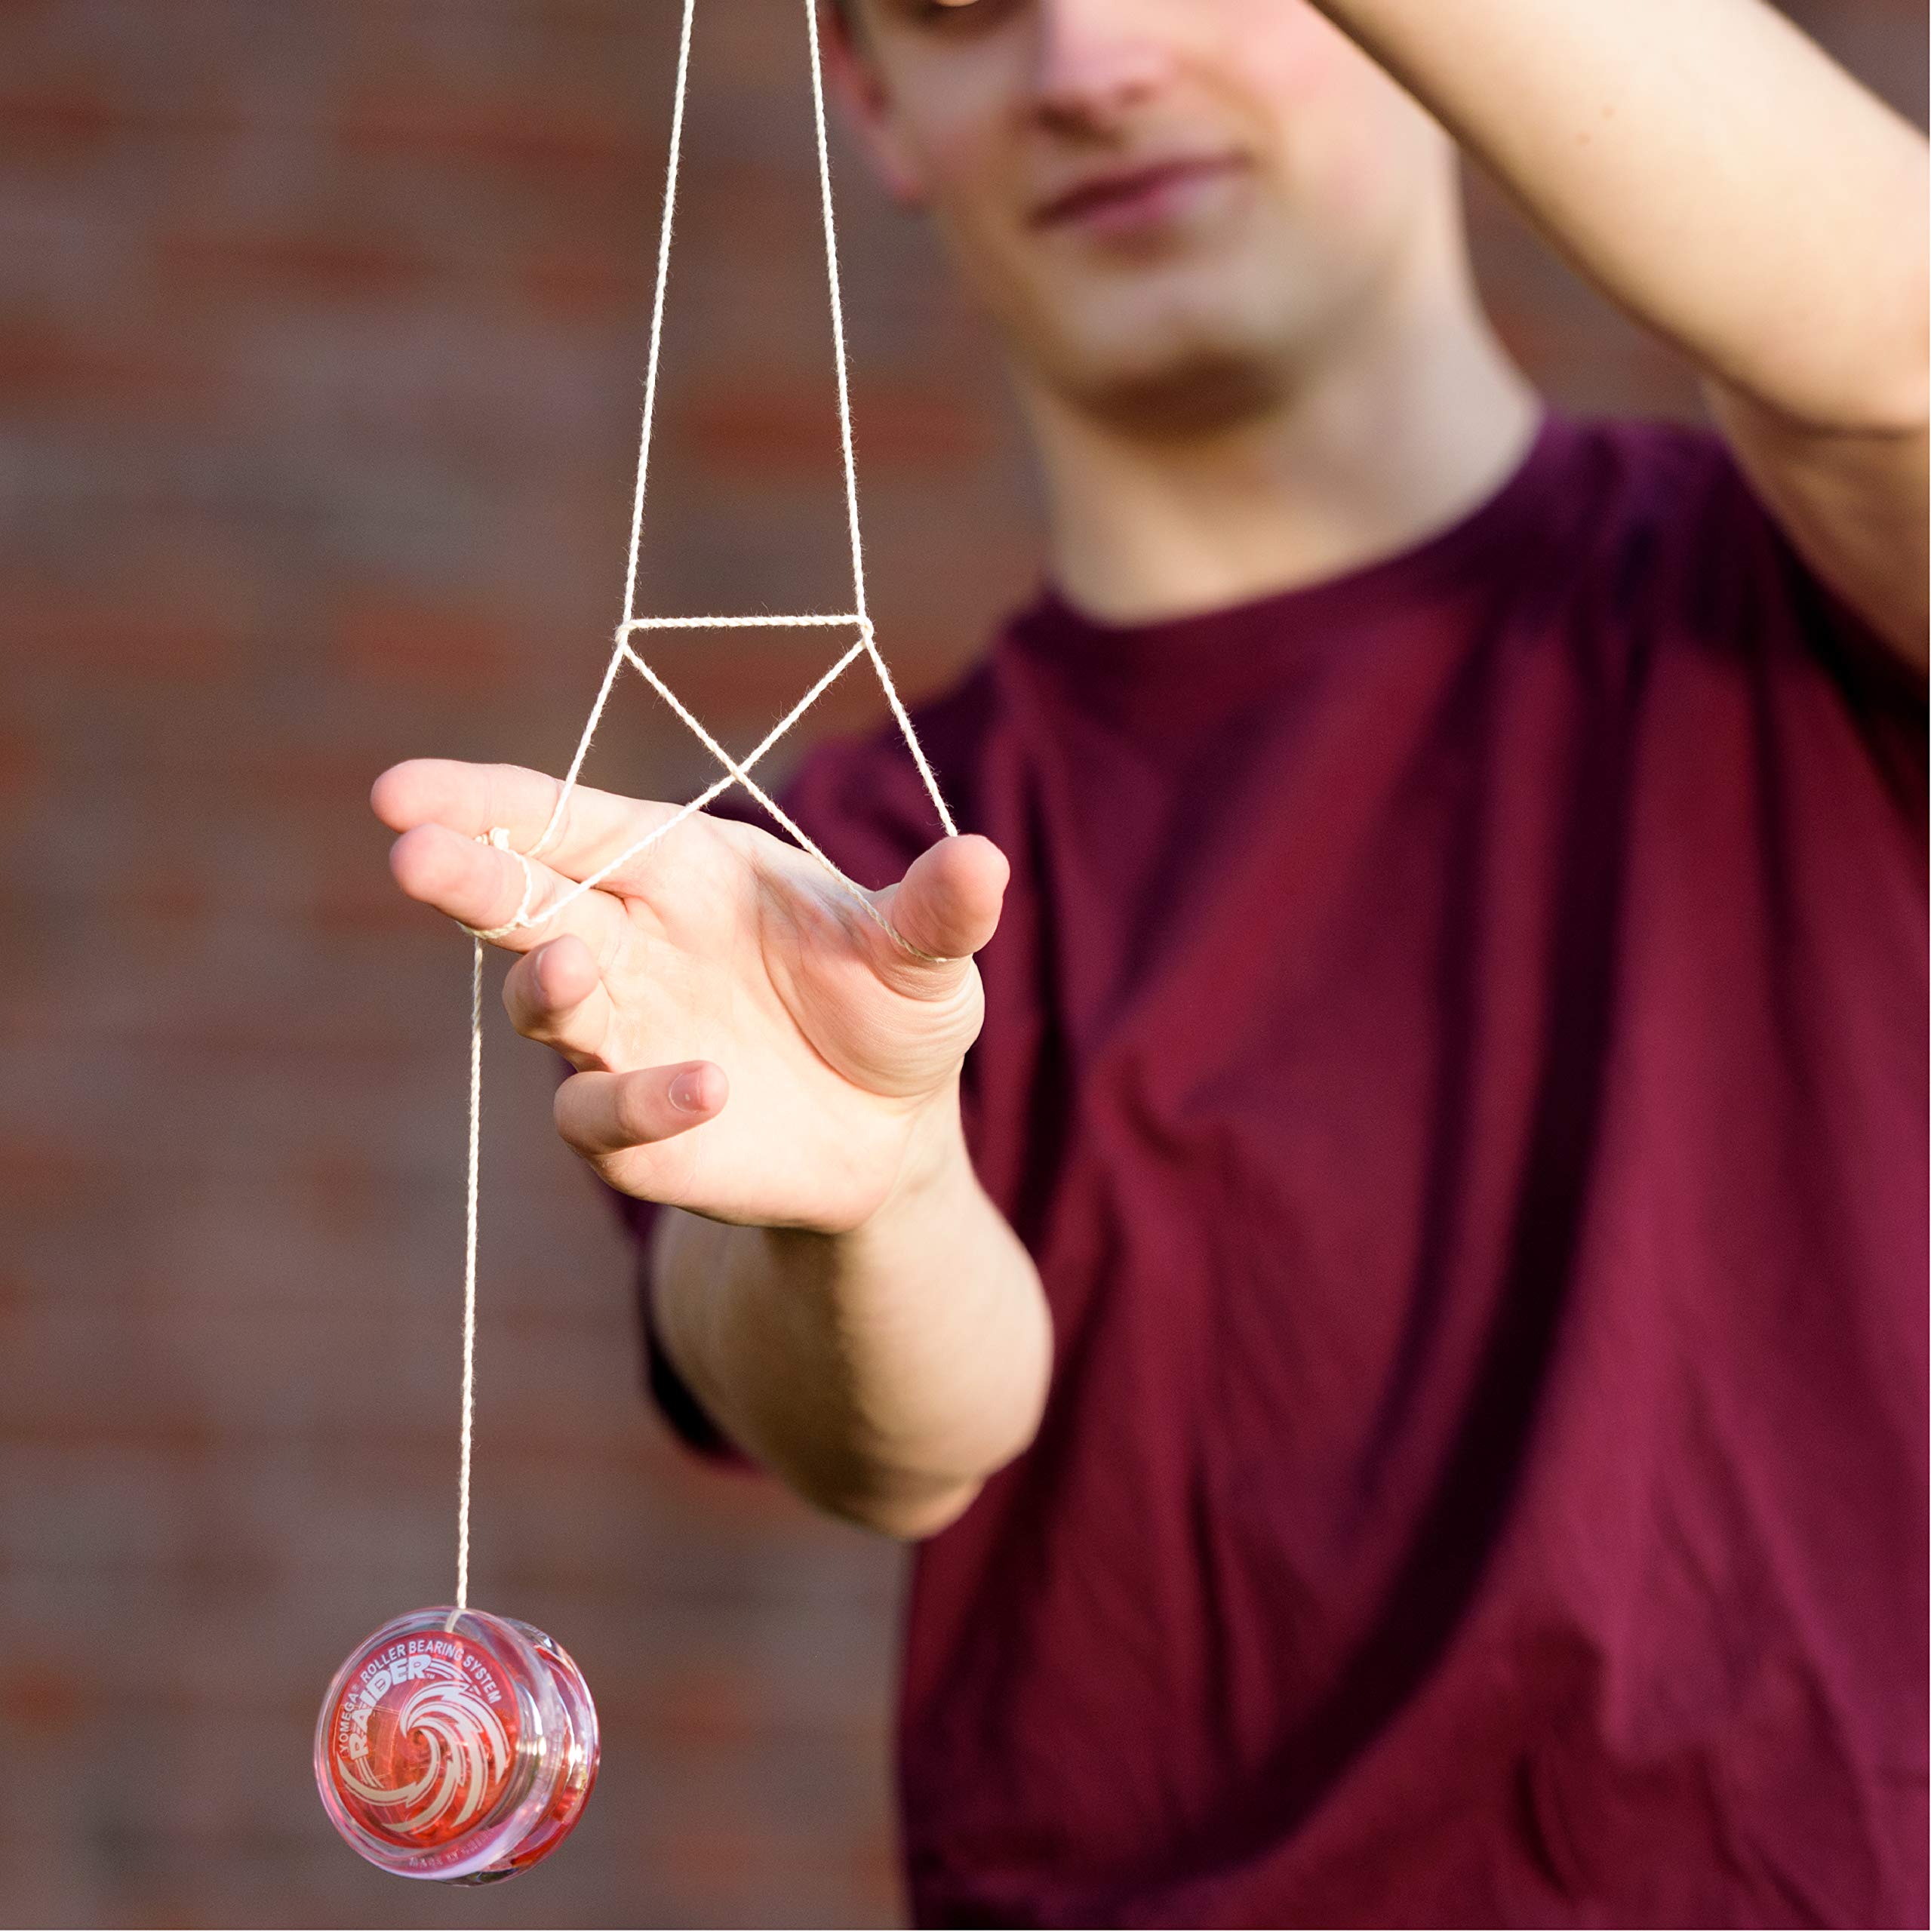 Yomega Raider – Responsive Pro Level Ball Bearing Yoyo, Designed for Advanced String Trick and Looping Play (Color May Vary)